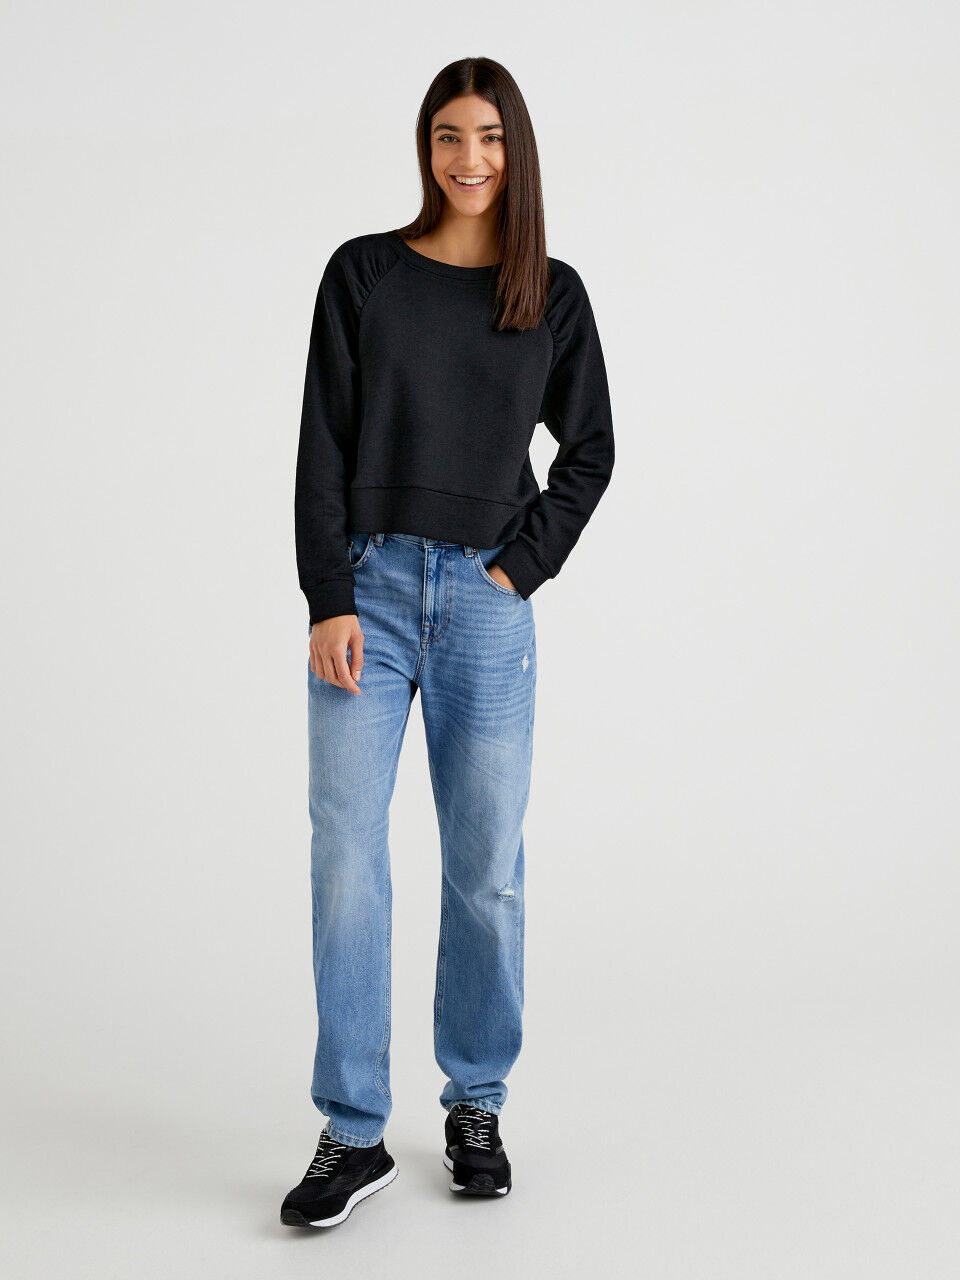 Jeans aus teilweise recycelter Baumwolle